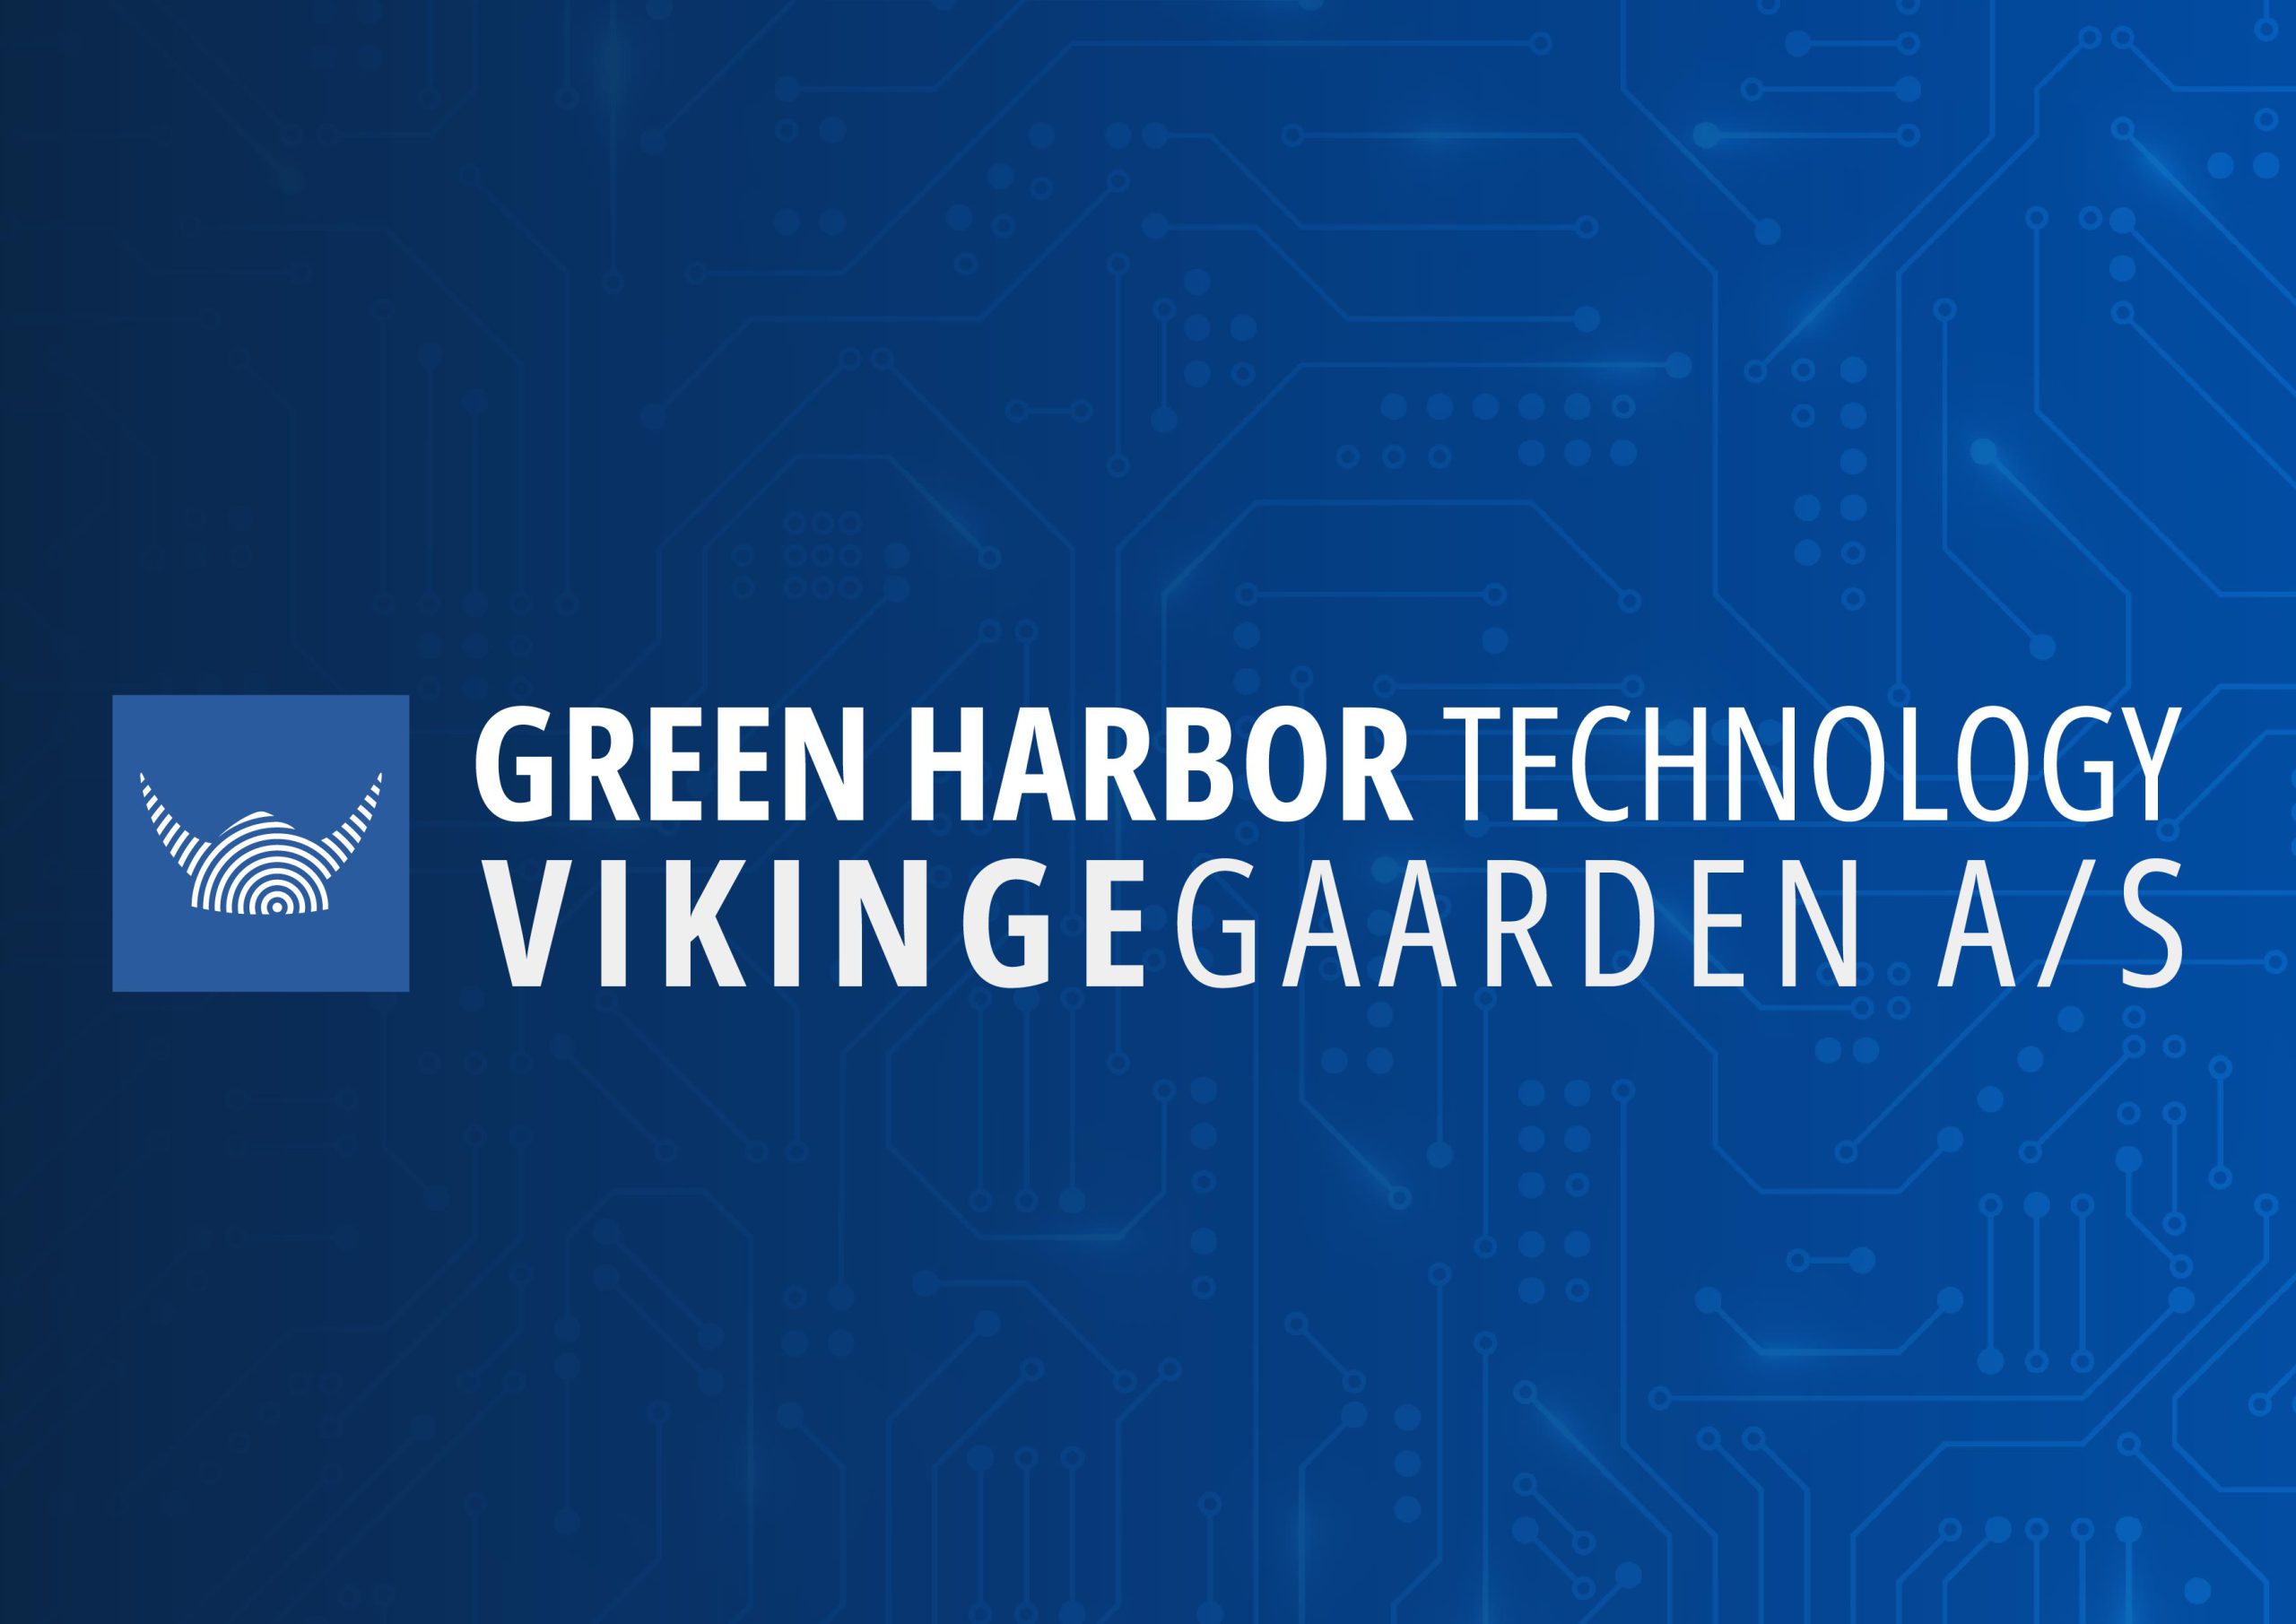 Vikingegaarden A/S is approved as an associate member of Danske Havne